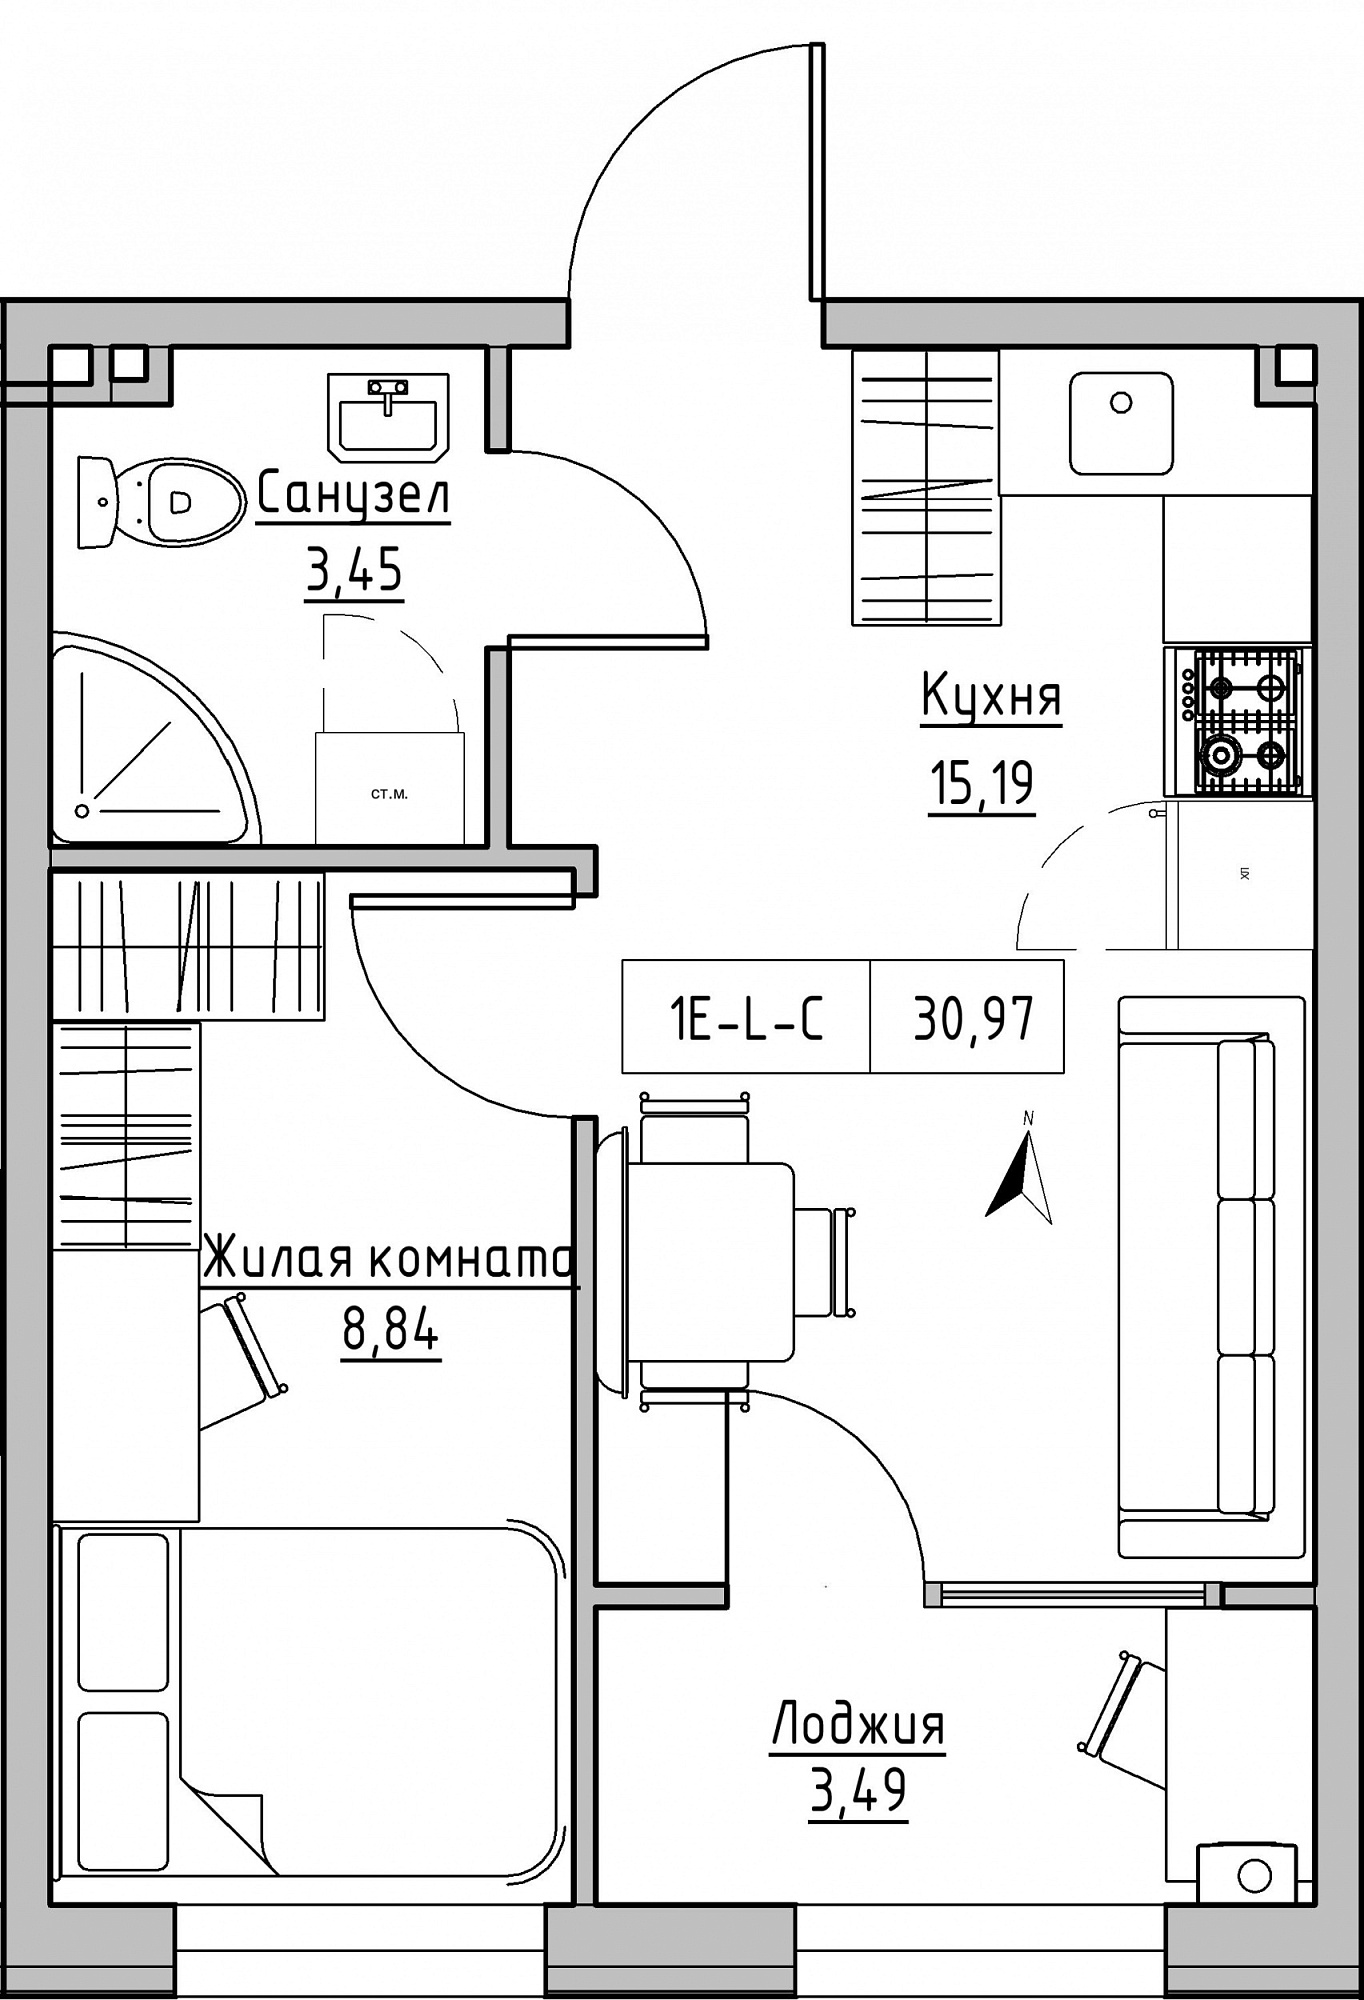 Planning 1-rm flats area 30.97m2, KS-024-01/0007.